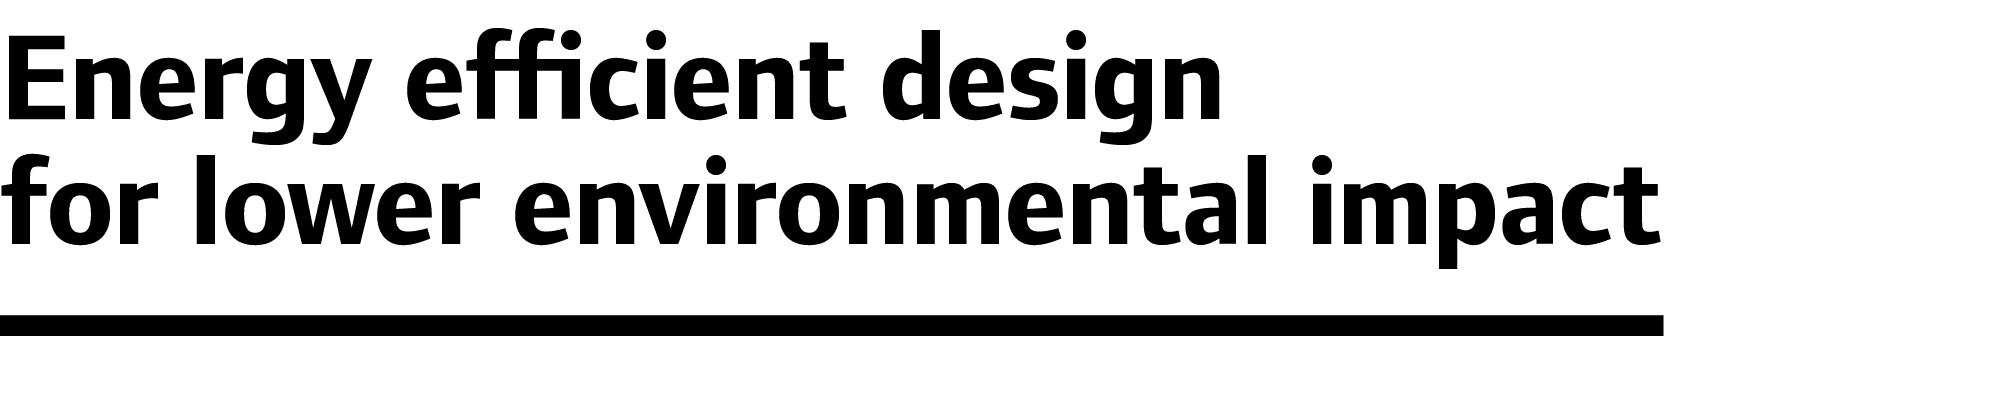 Energy efficient design for lower environmental impact 